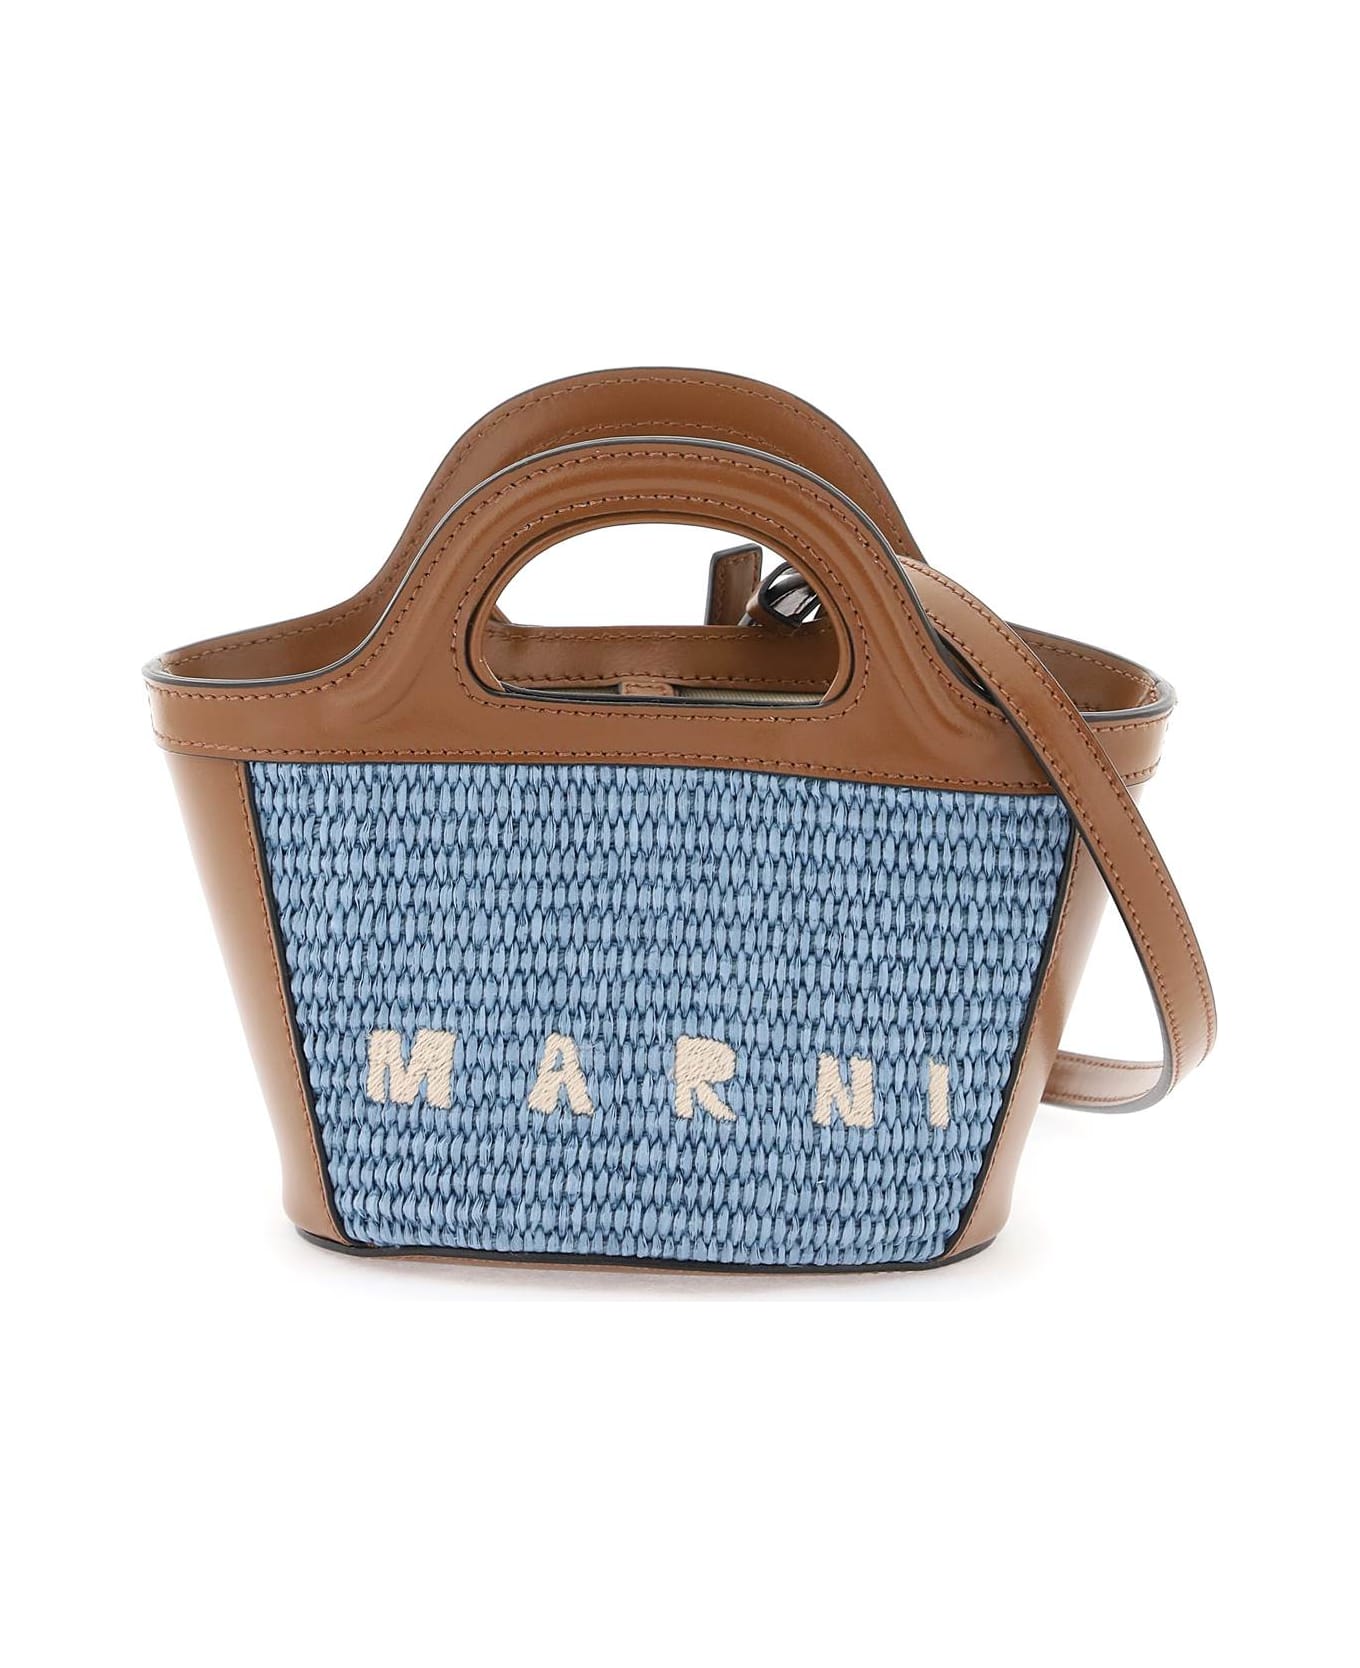 Marni Micro Tropicalia Summer Bag In Brown Leather And Light Blue Raffia - Brown ショルダーバッグ